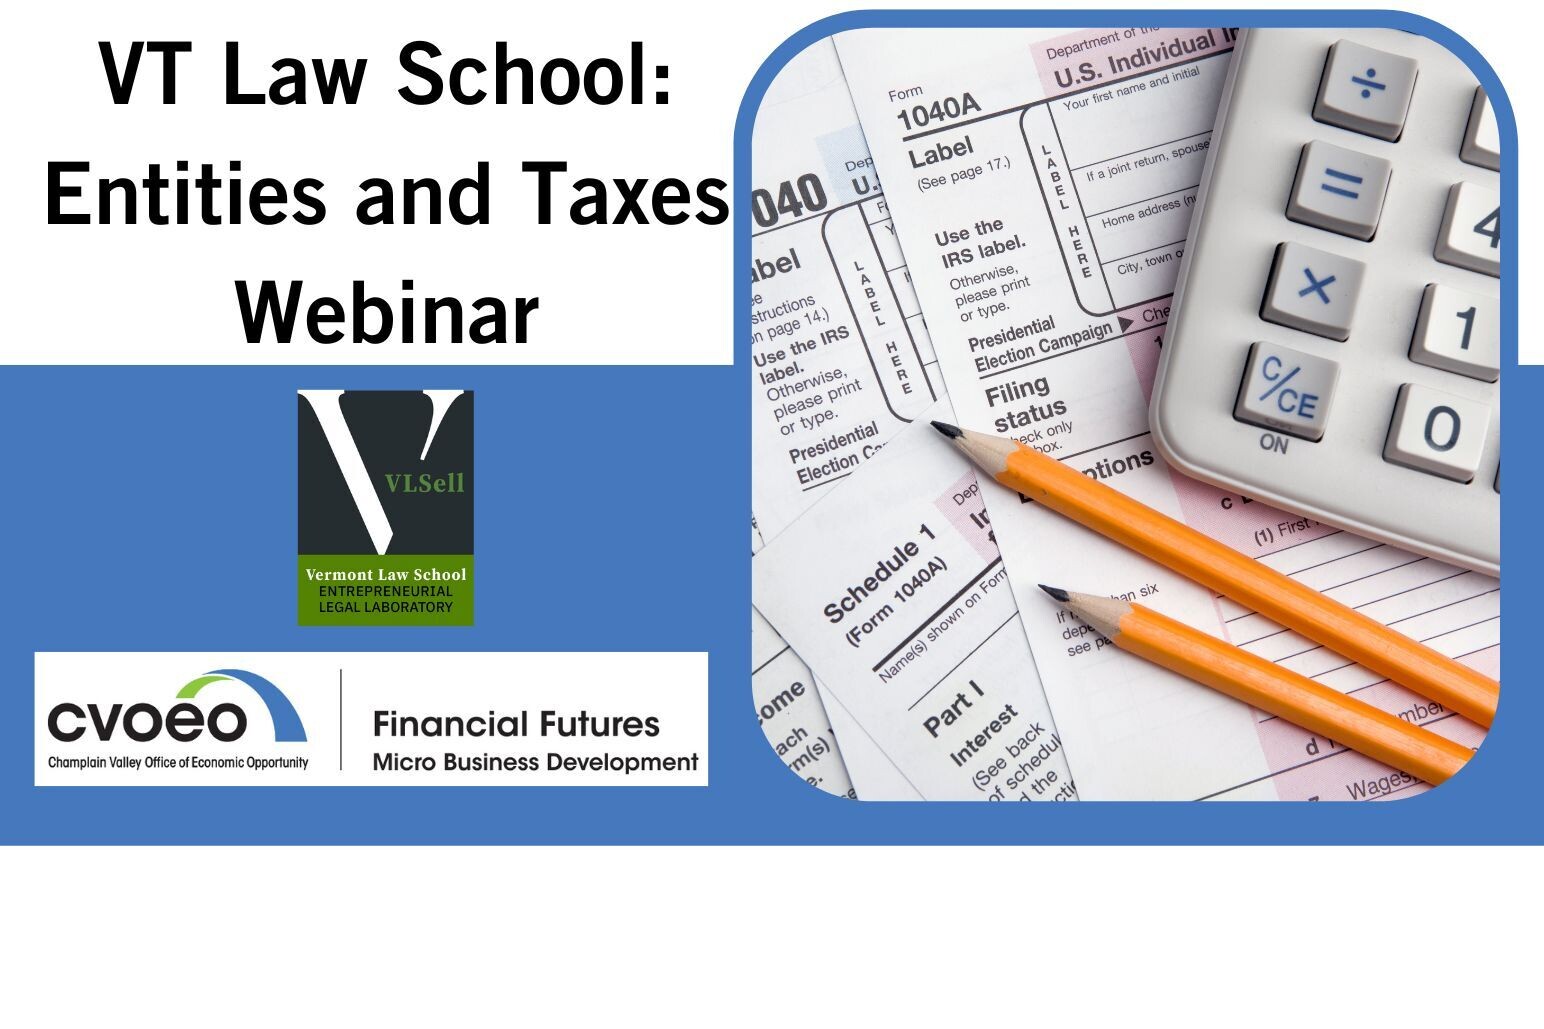 VT Law School: Entities and Taxes Webinar